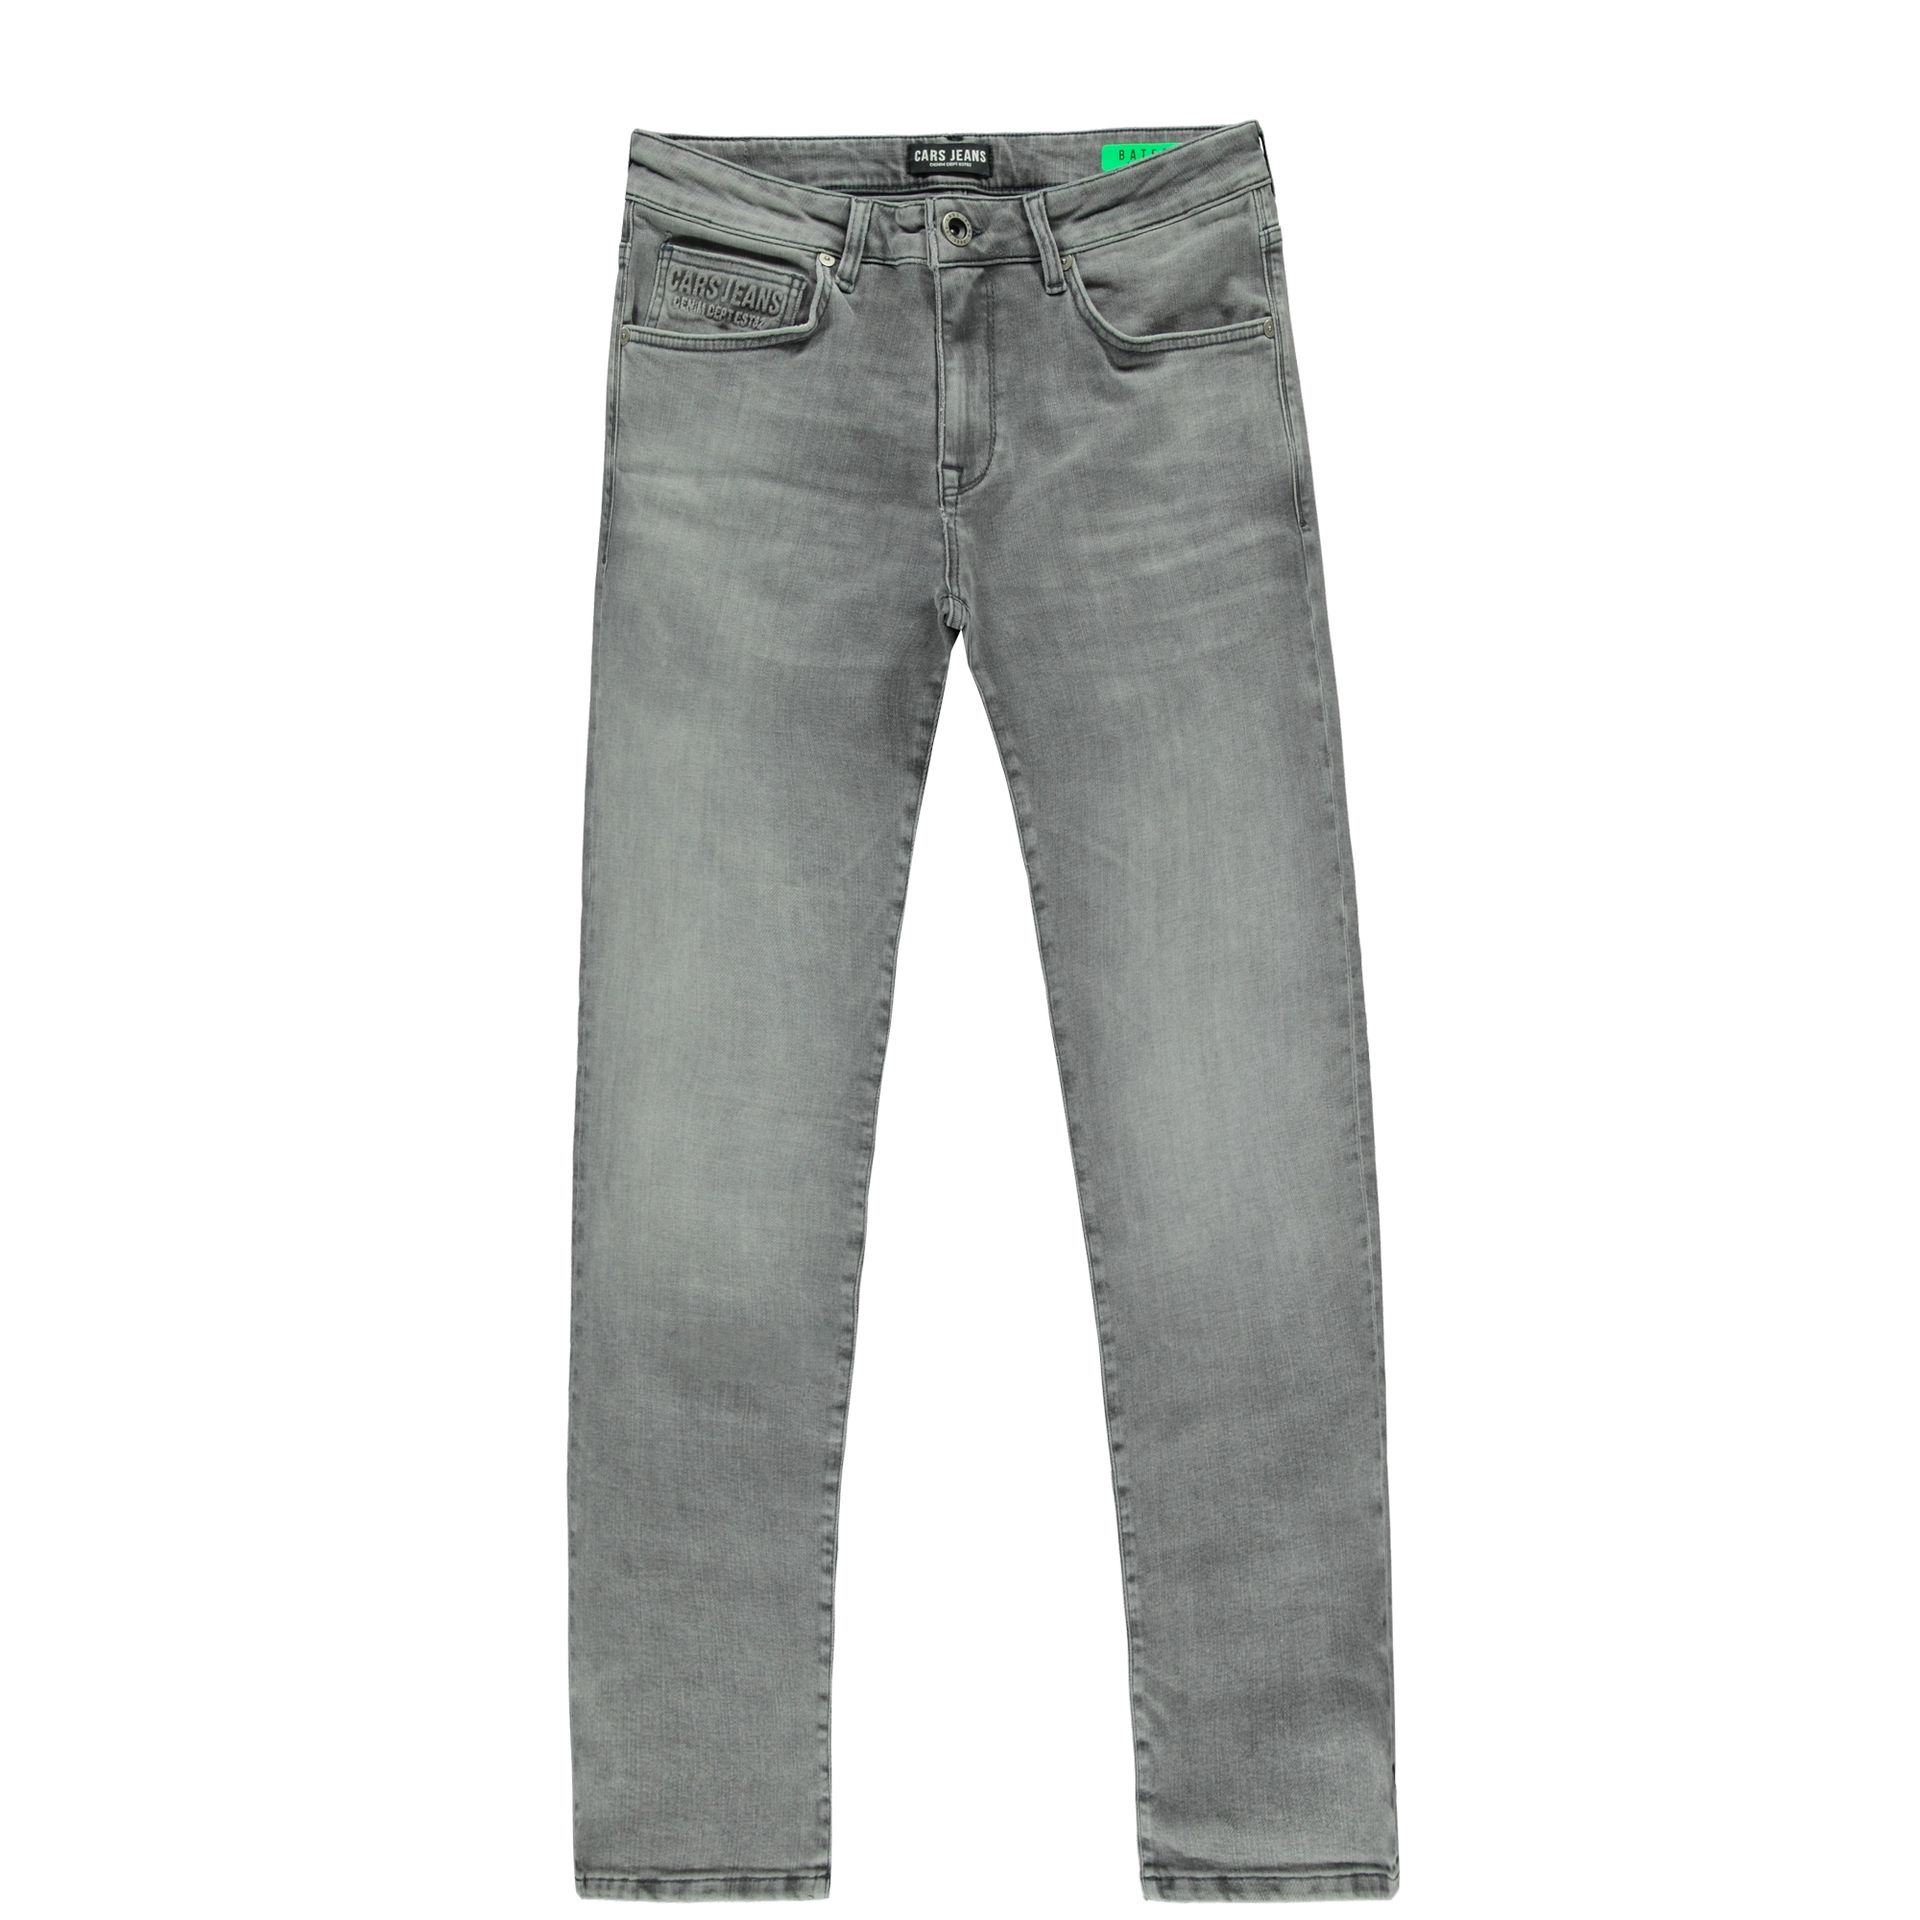 Cars jeans Jeans Bates Slim fit 13 grey used 00108286-EKA03000200000012